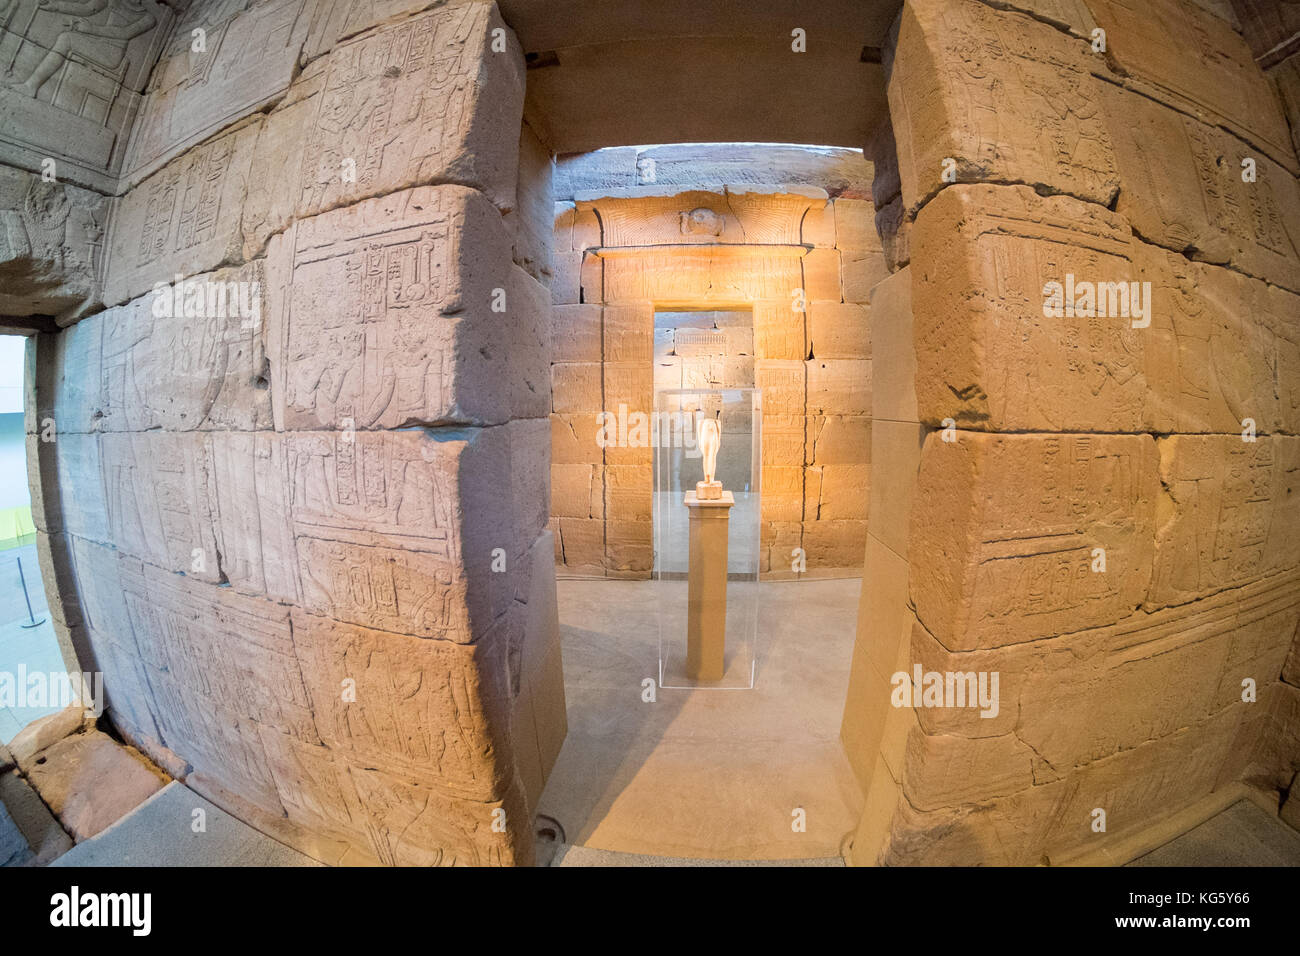 Egyptian Temple Of Dendur Inside The Metropolitan Museum Of